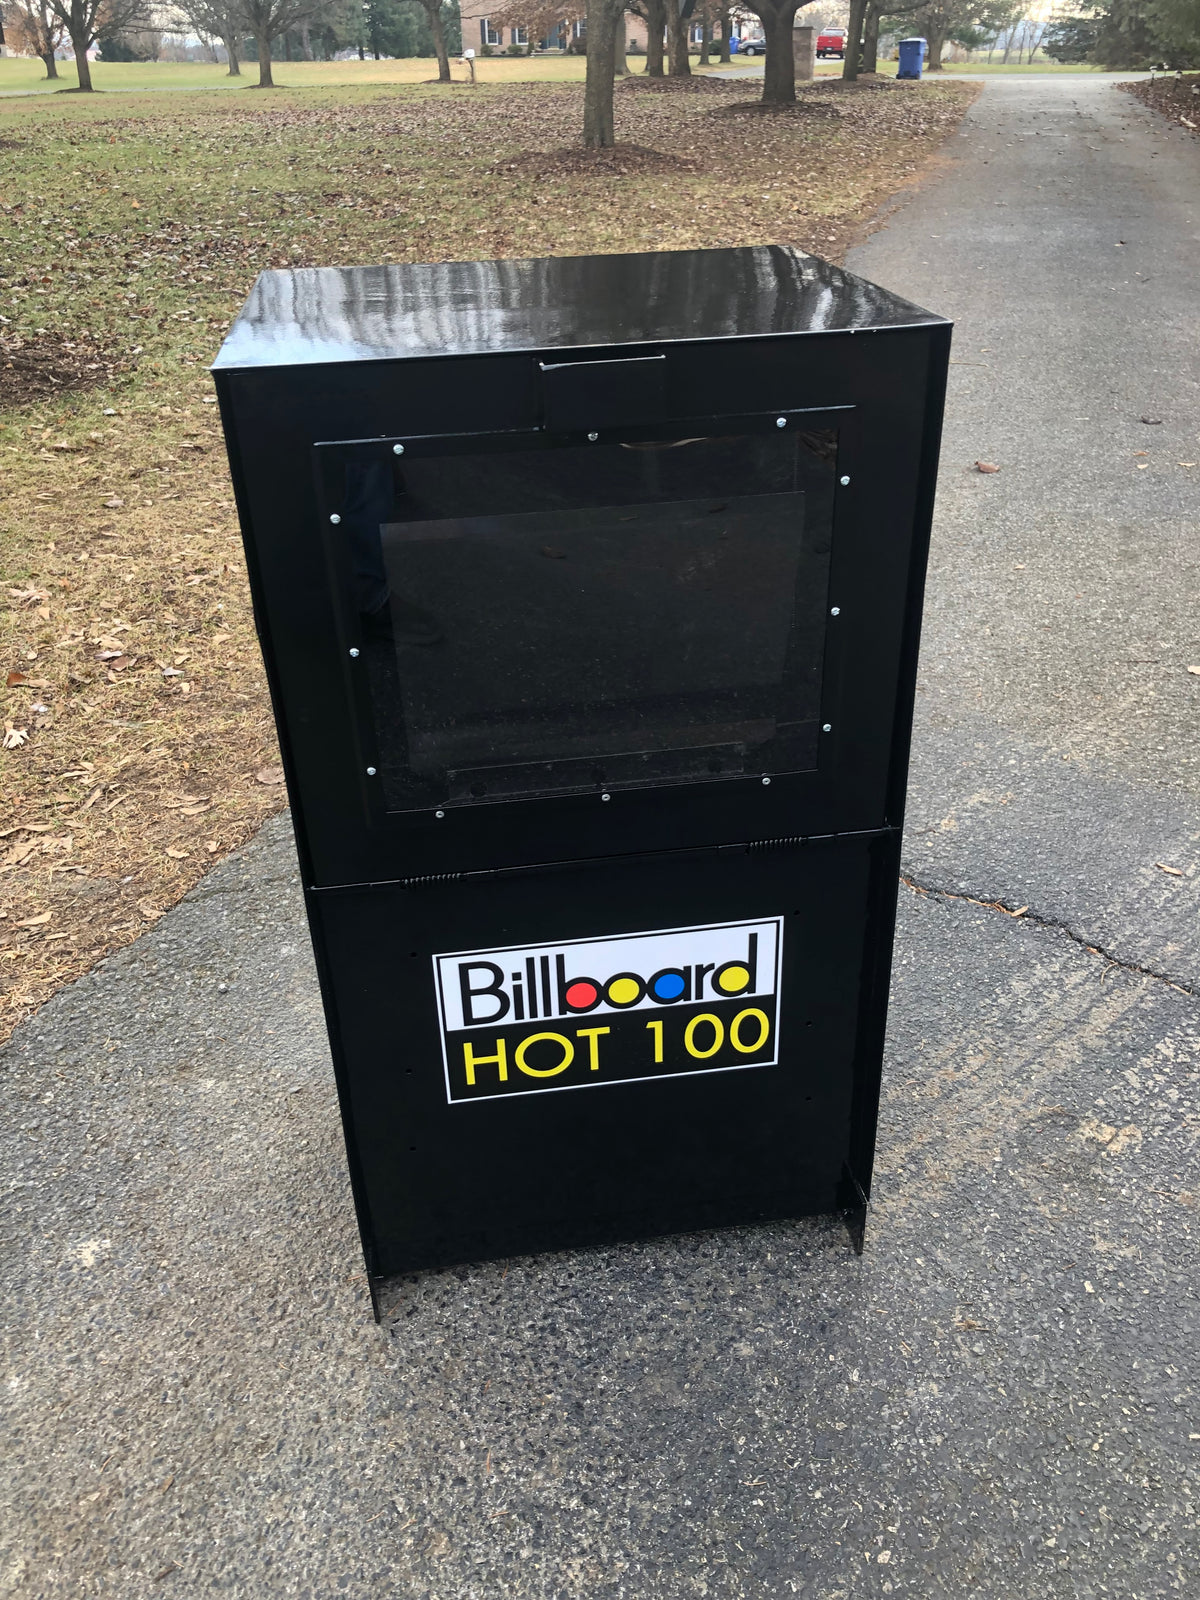 Billboard 100-----Double Storage - Repurposed Newspaper Box